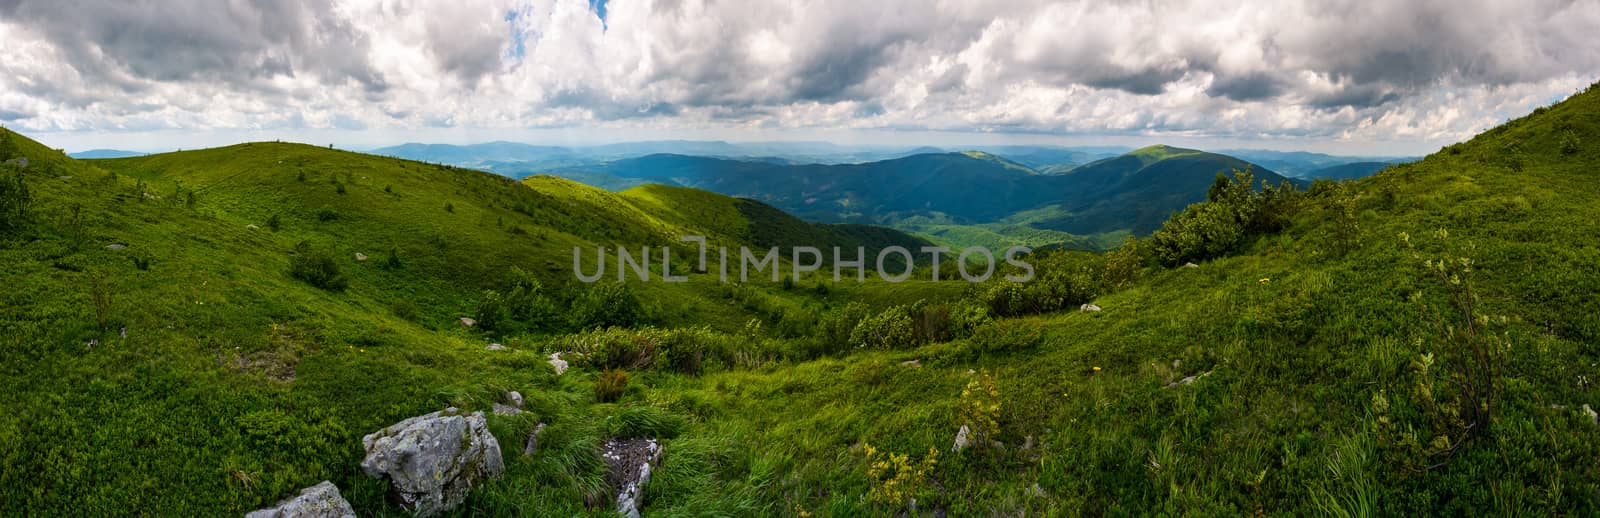 grassy hillside of Carpathians on overcast day by Pellinni